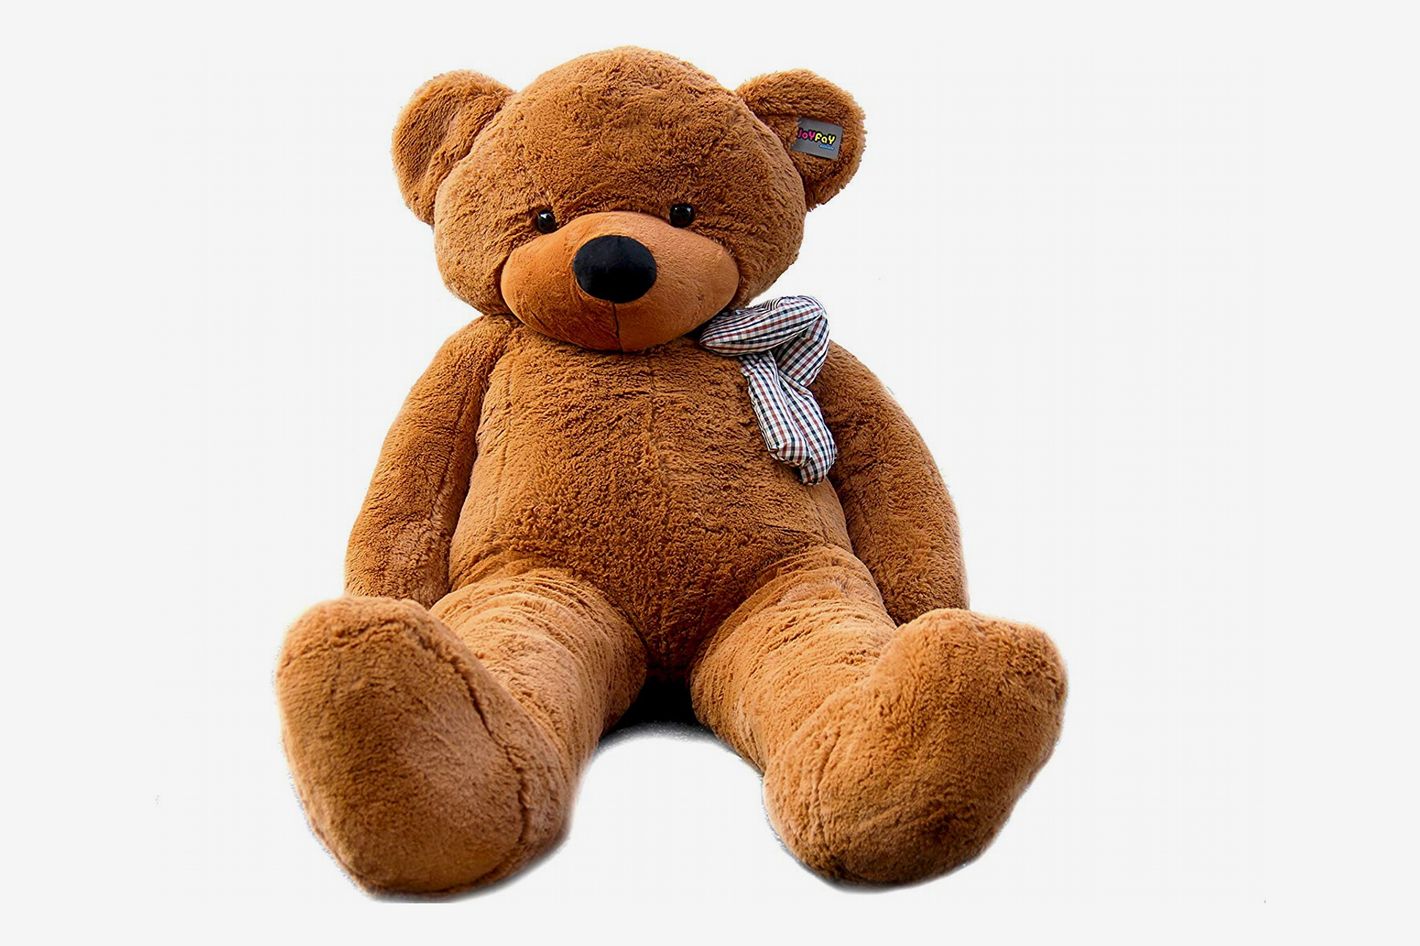 Giant Teddy Bear Big Plush Stuffed Animals Gift for Girlfriend,Valentine's Day 